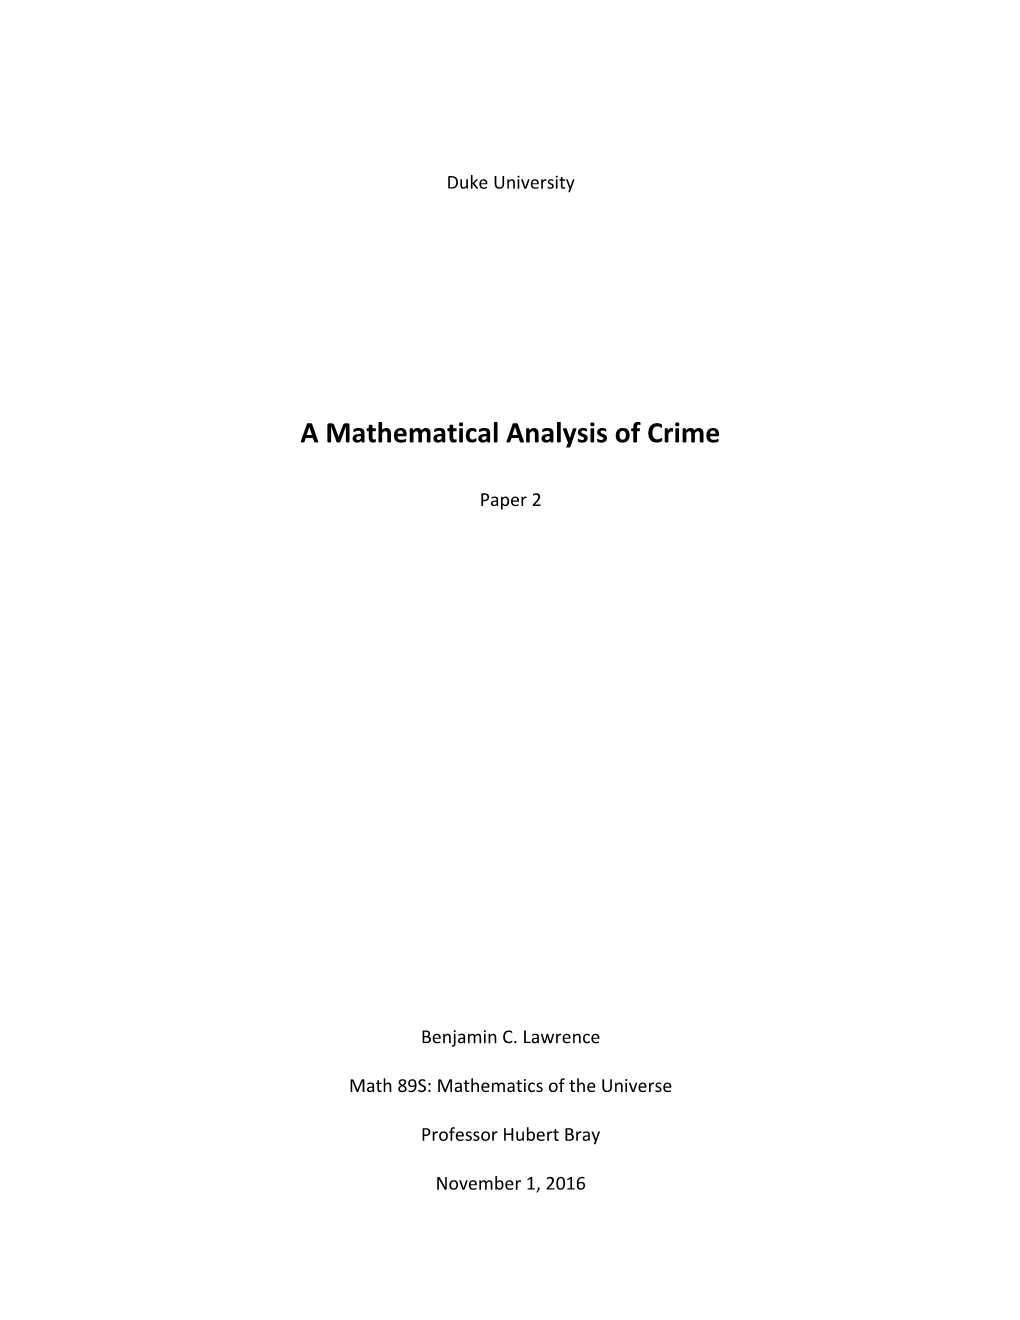 A Mathematical Analysis of Crime